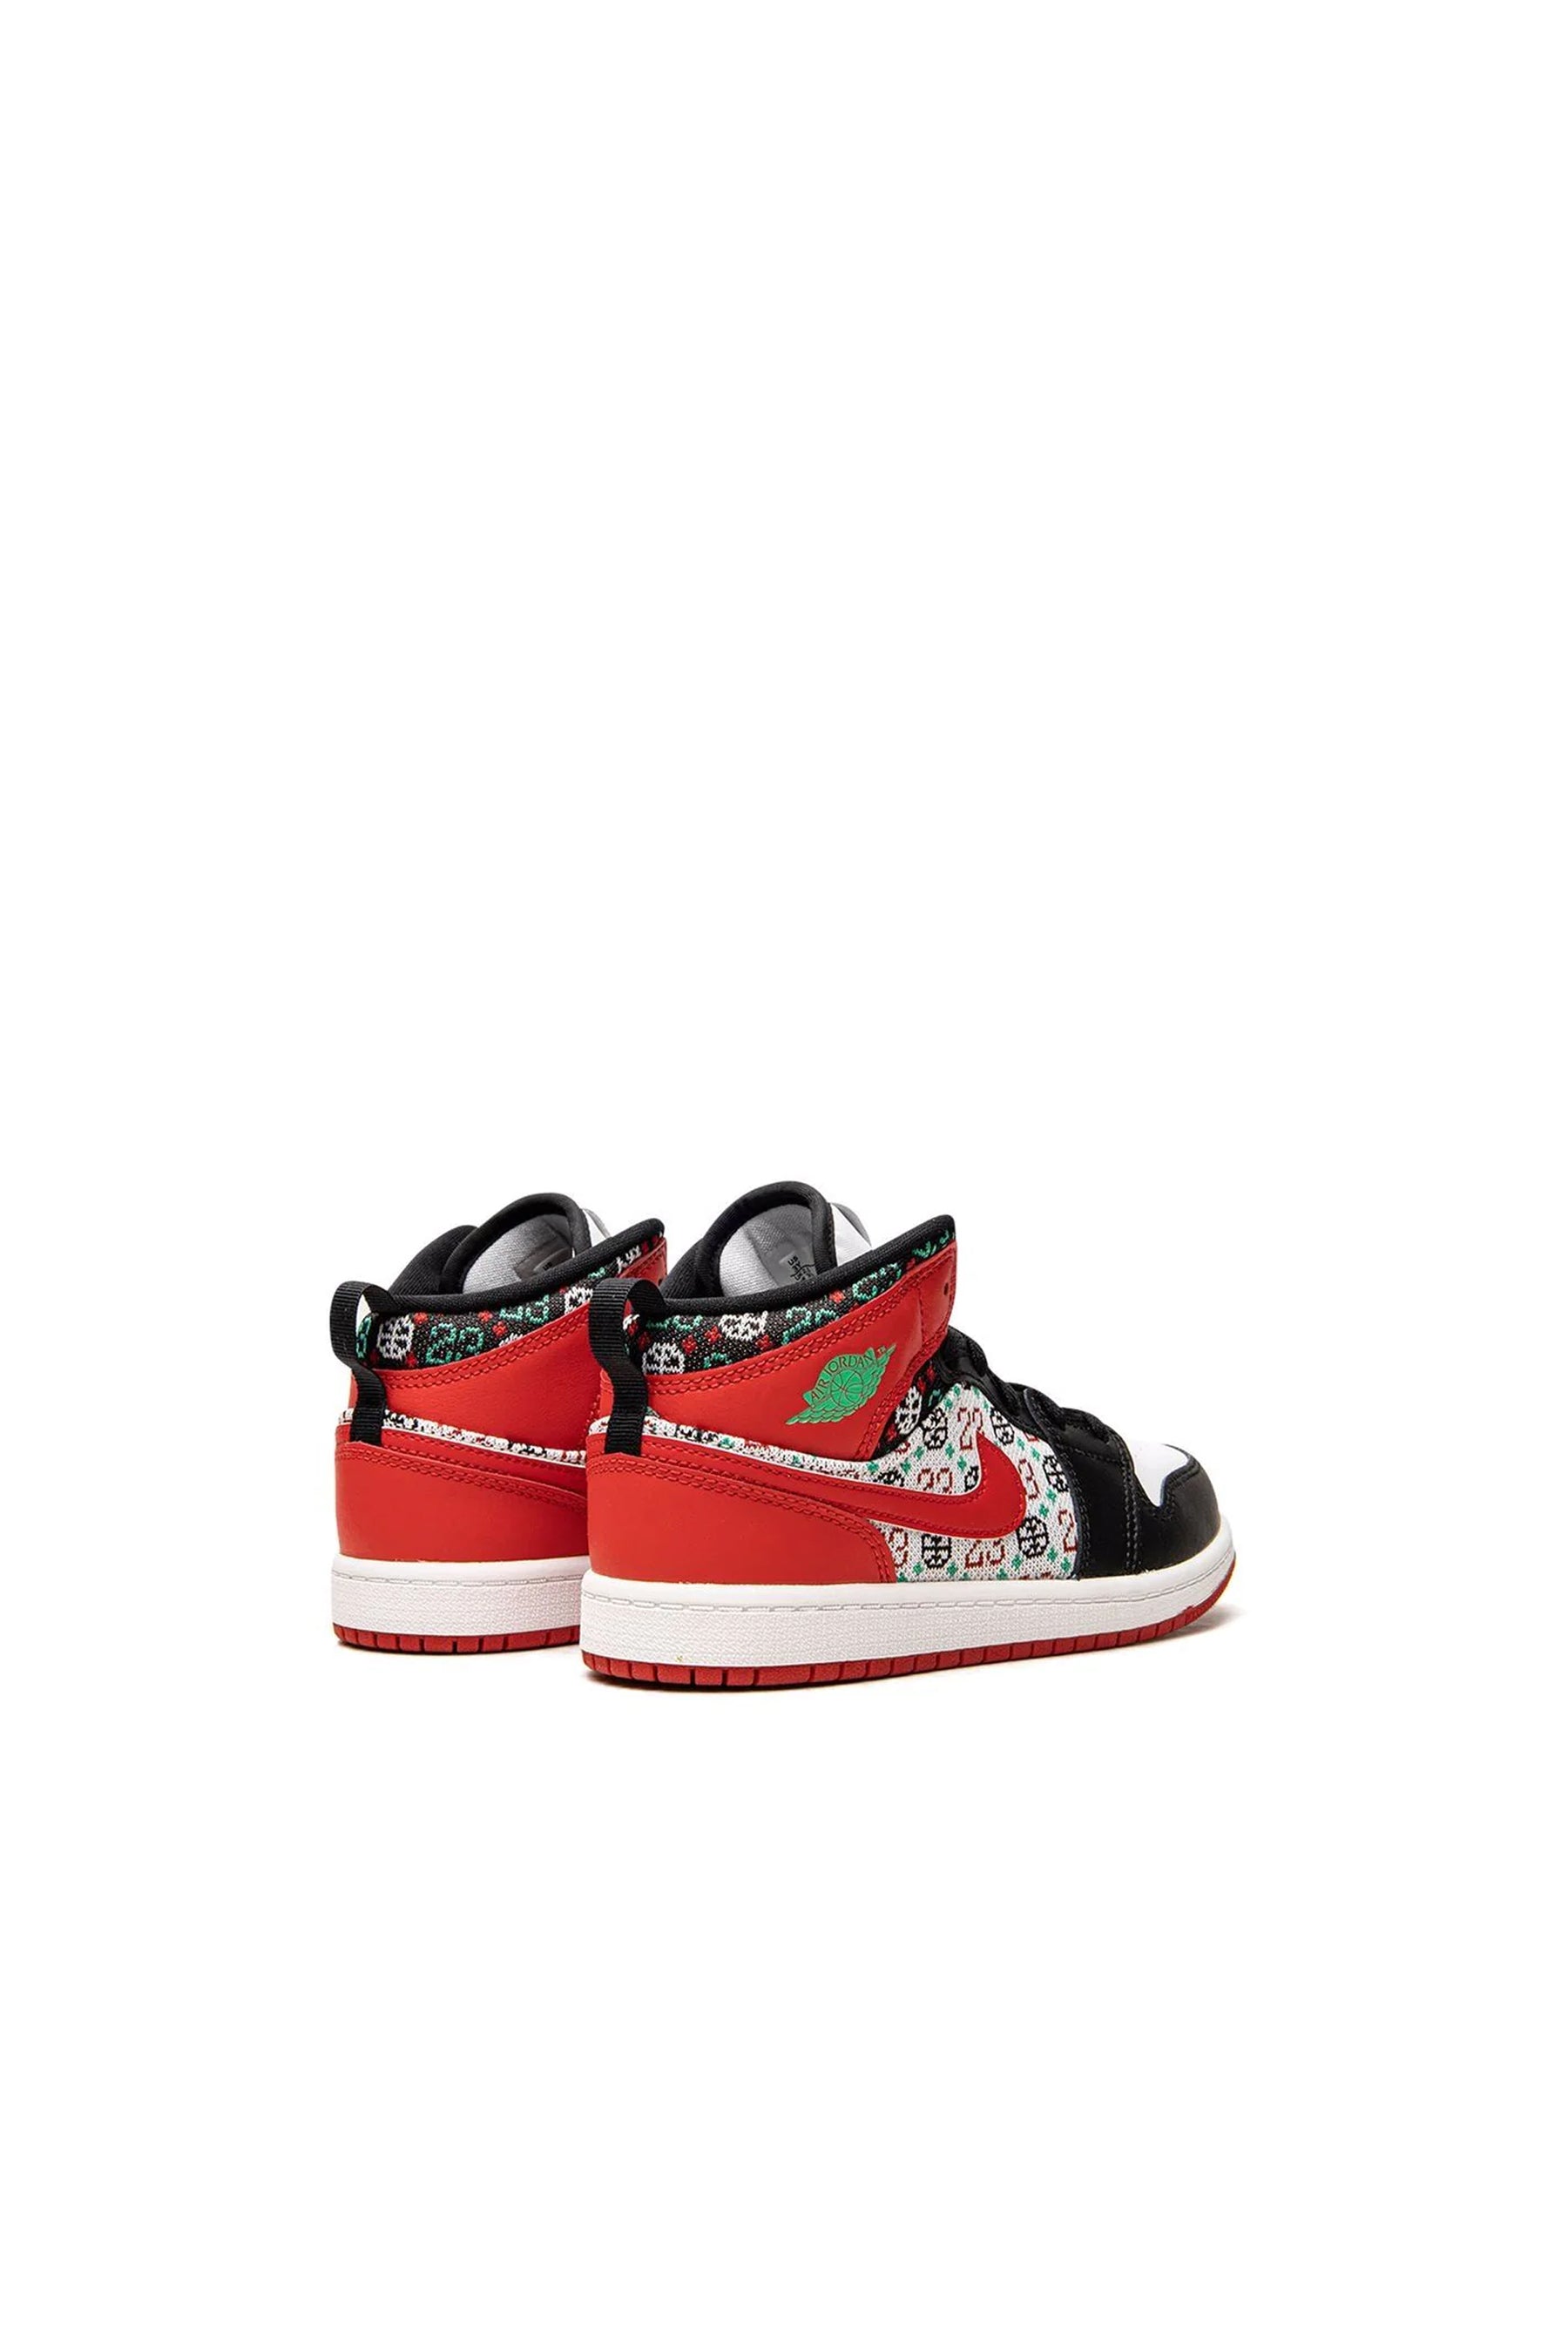 Nike Air Jordan 1 Mid "Holiday" sneakers